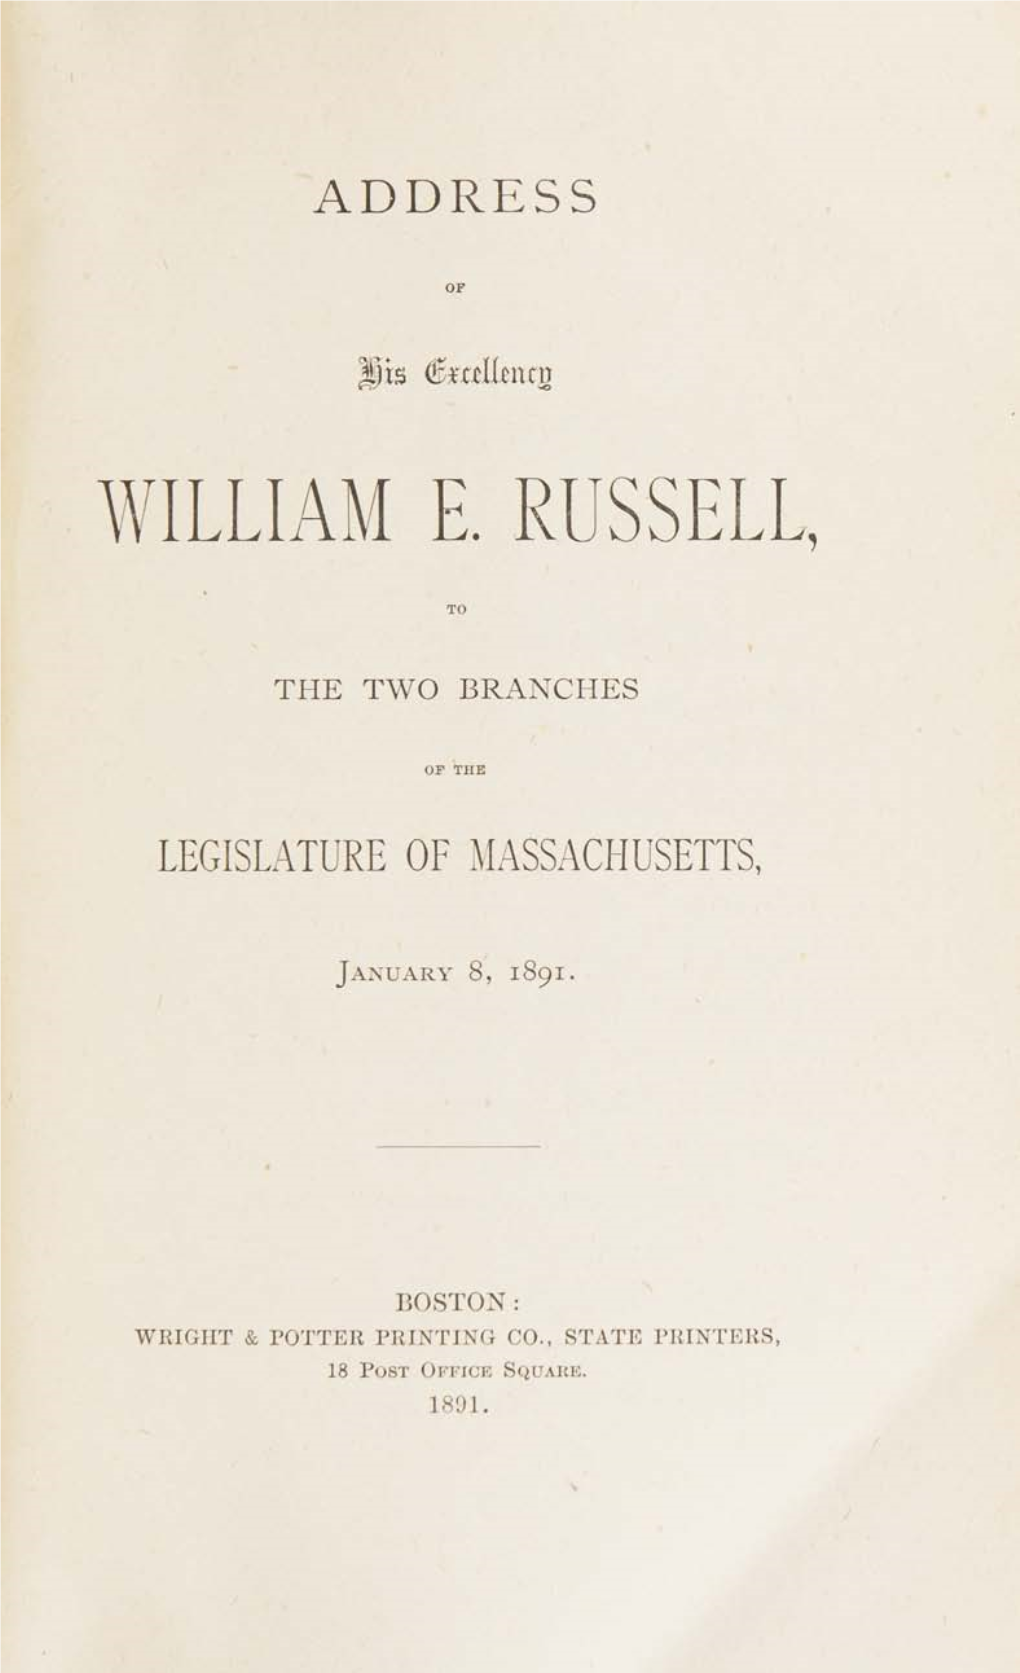 William E. Russell